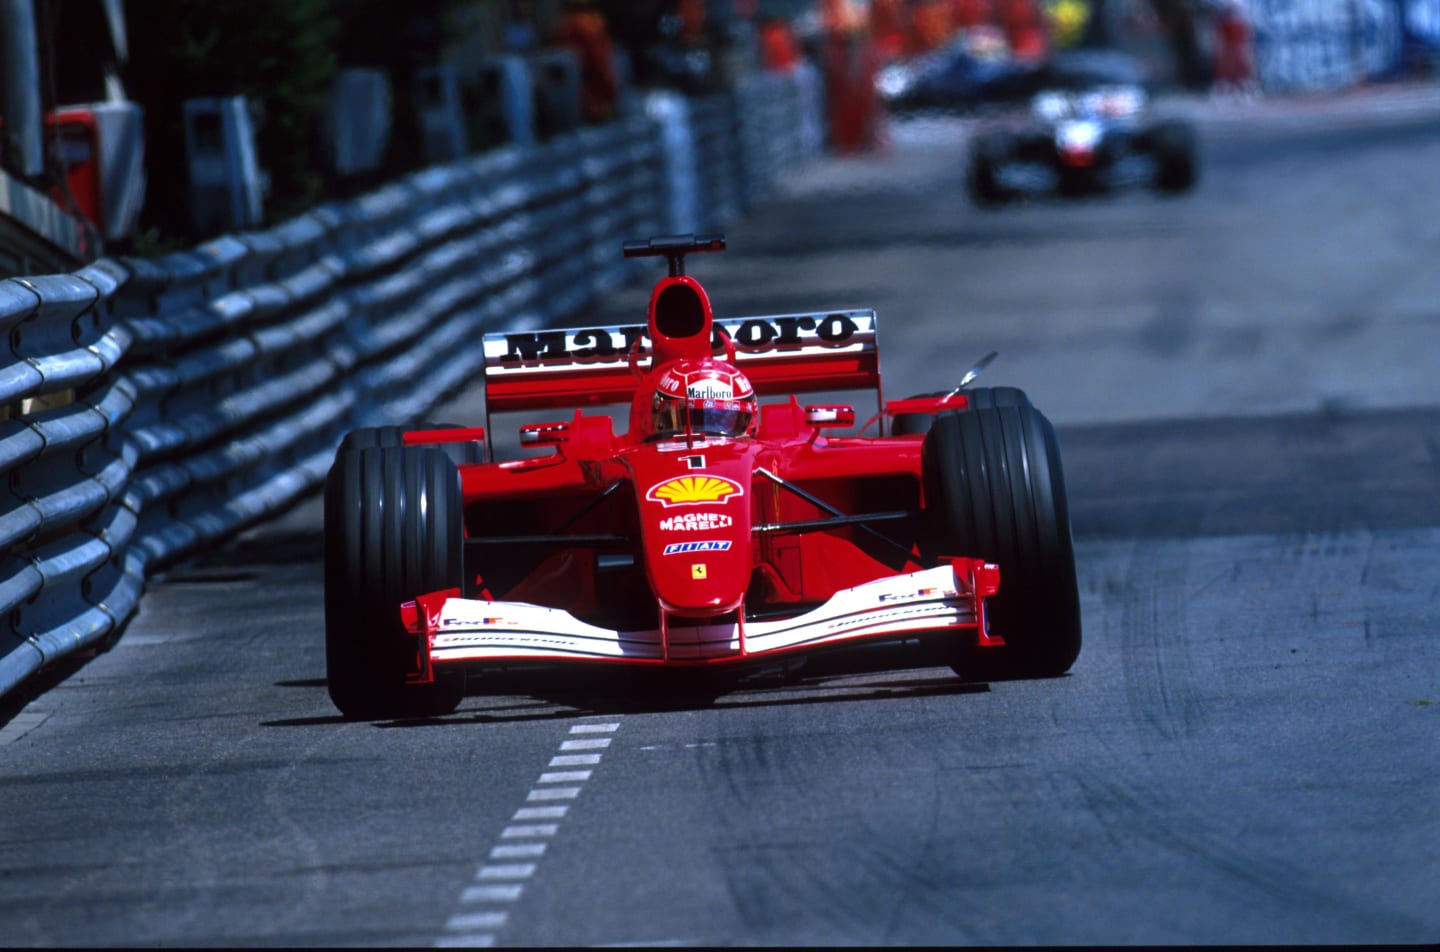 Michael Schumacher(GER) Ferrari F1 2001 - Winner
Monaco Grand Prix, Monte Carlo, 27 May 2001
BEST